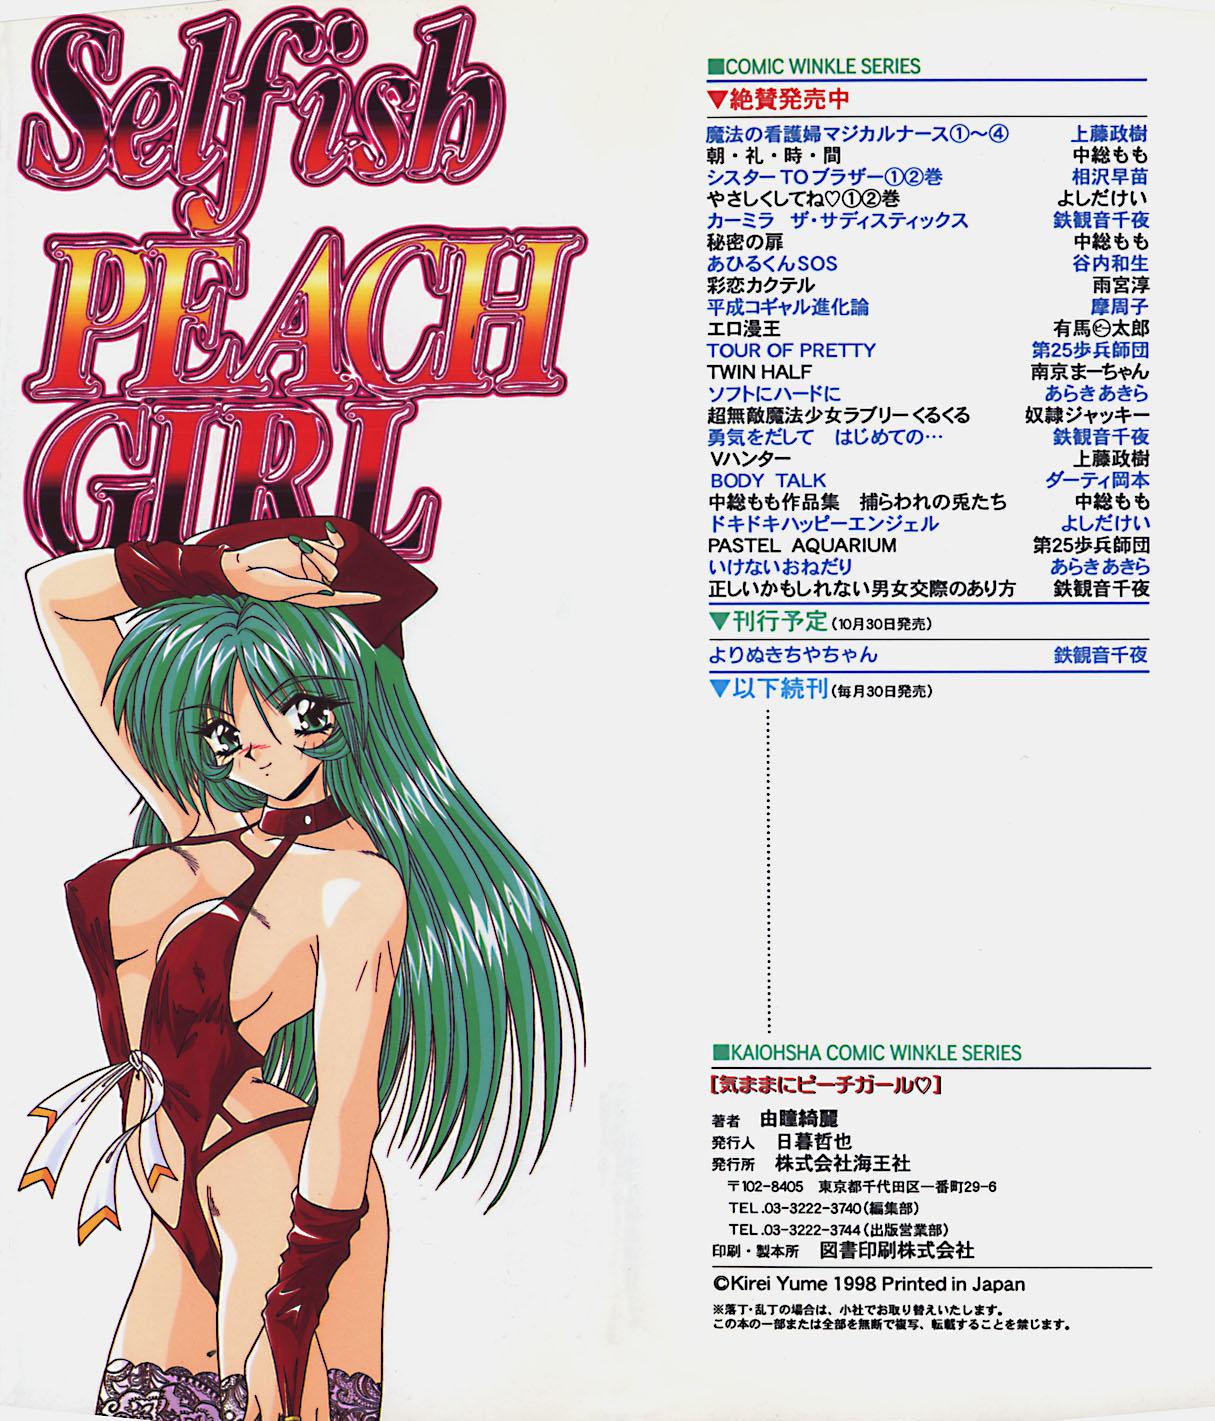 Piercing Kimama ni Peach Girl - Selfish Peach Girl Hidden - Page 3